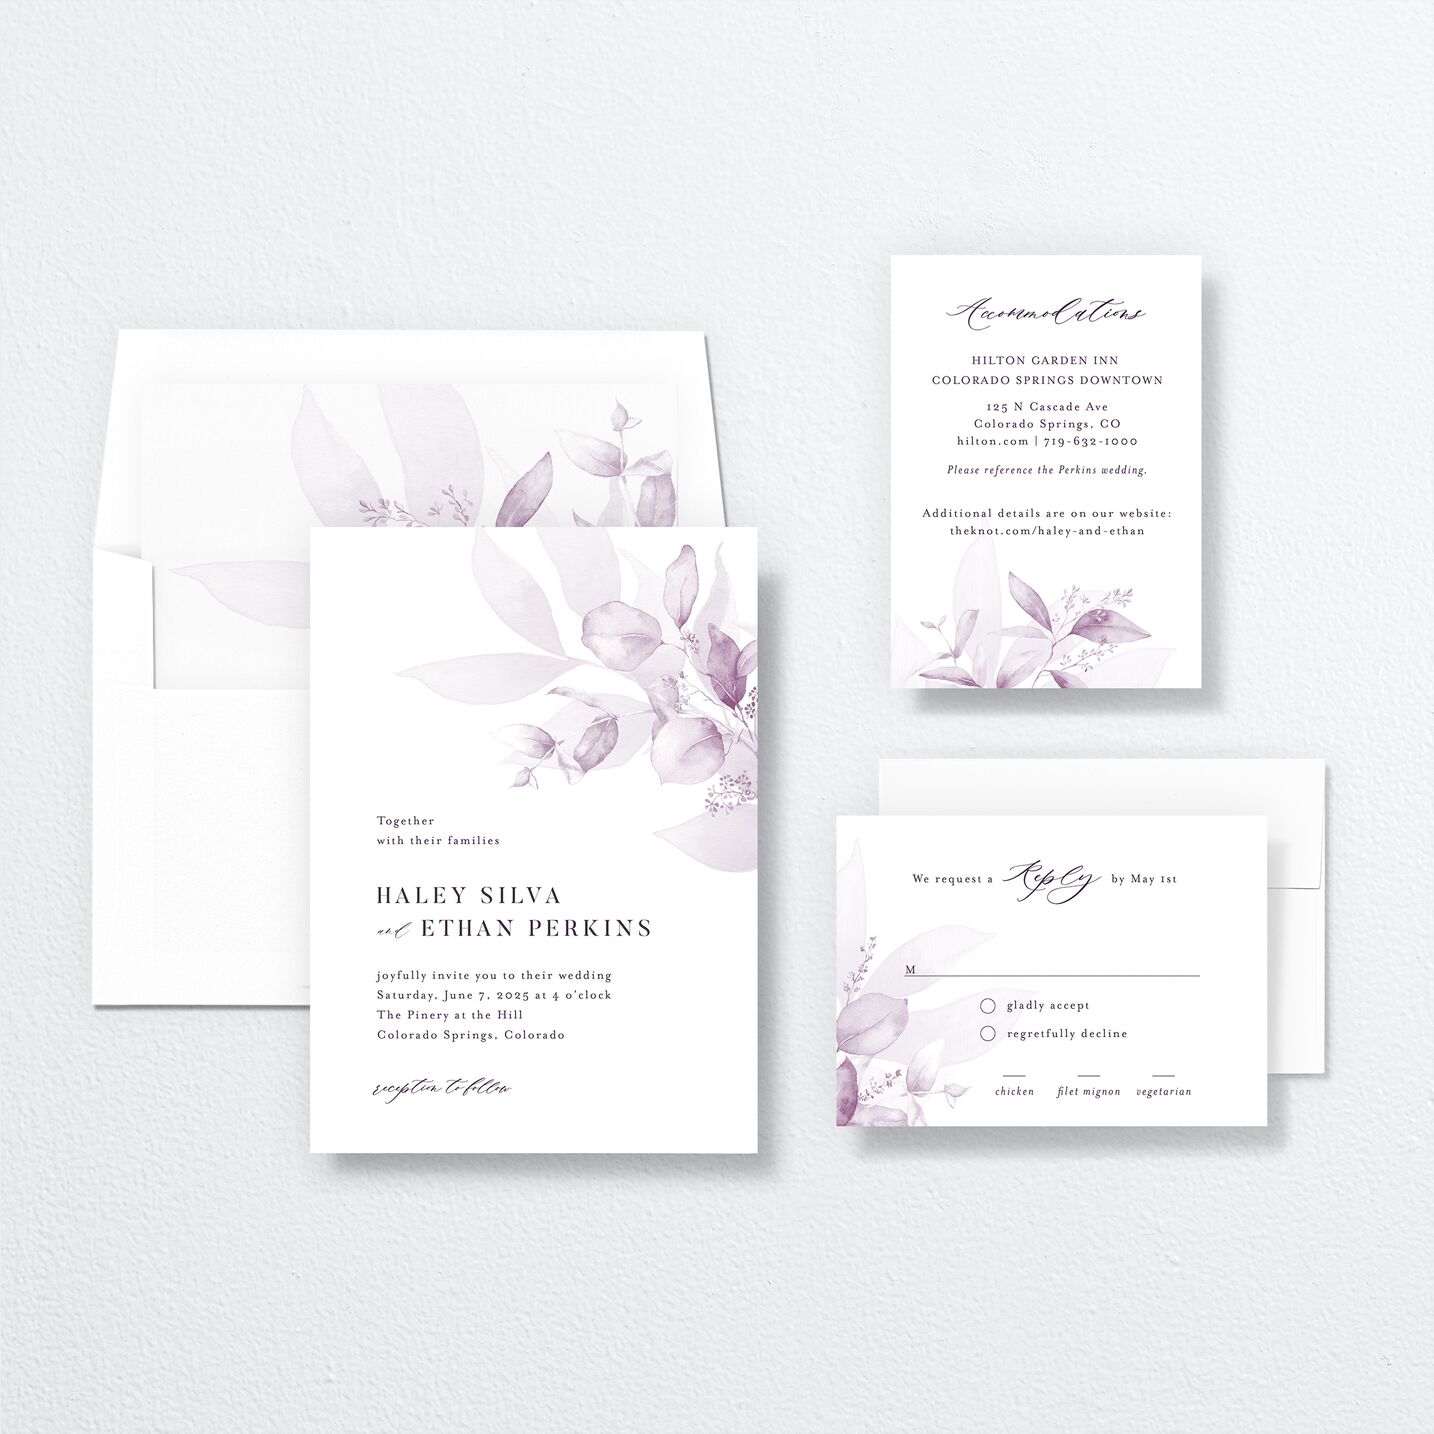 Romantic Greenery Wedding Invitations suite in lavender